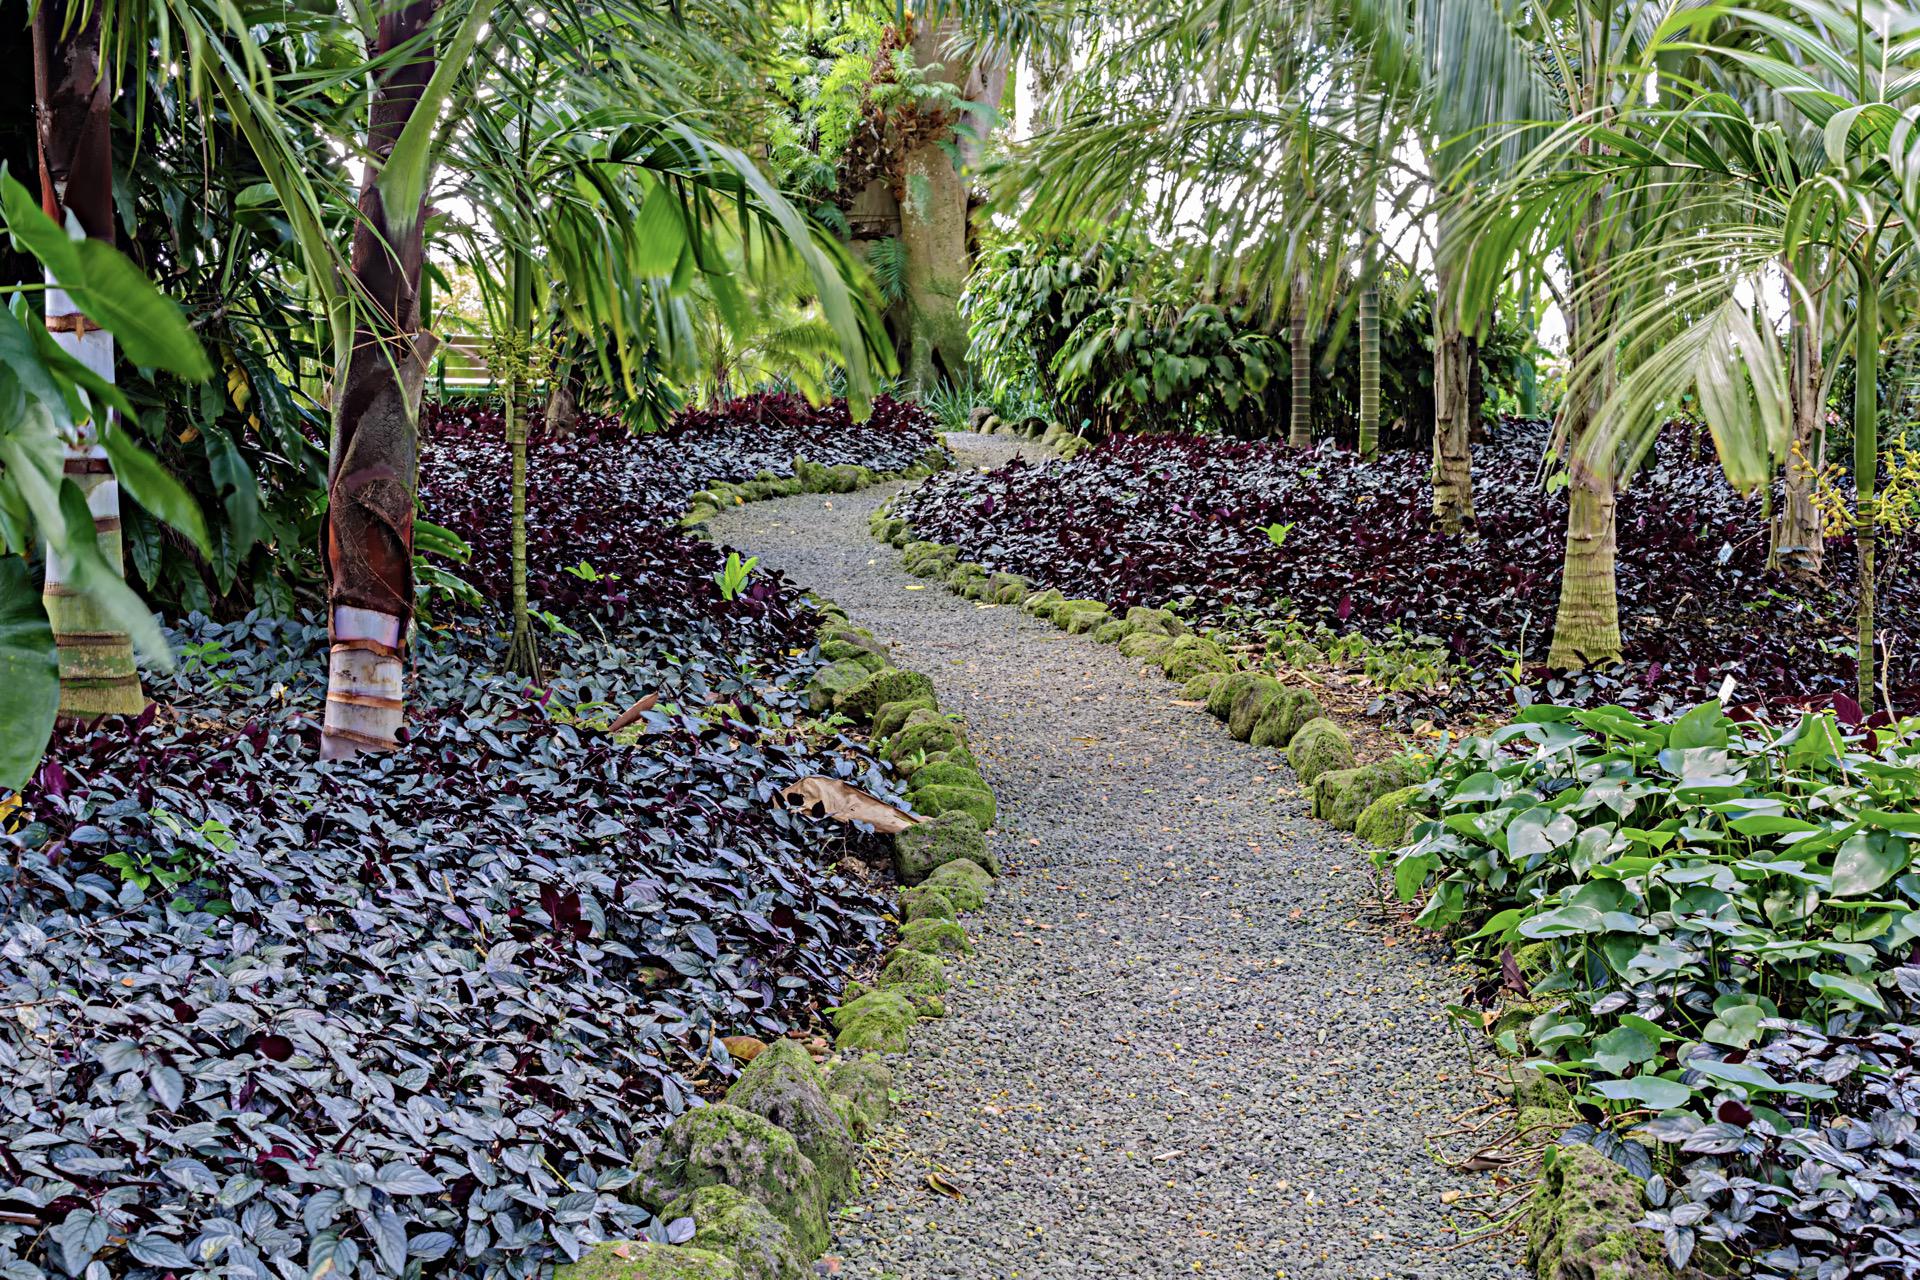 Wahiawā Botanical Garden - Home To Tropical Flowers